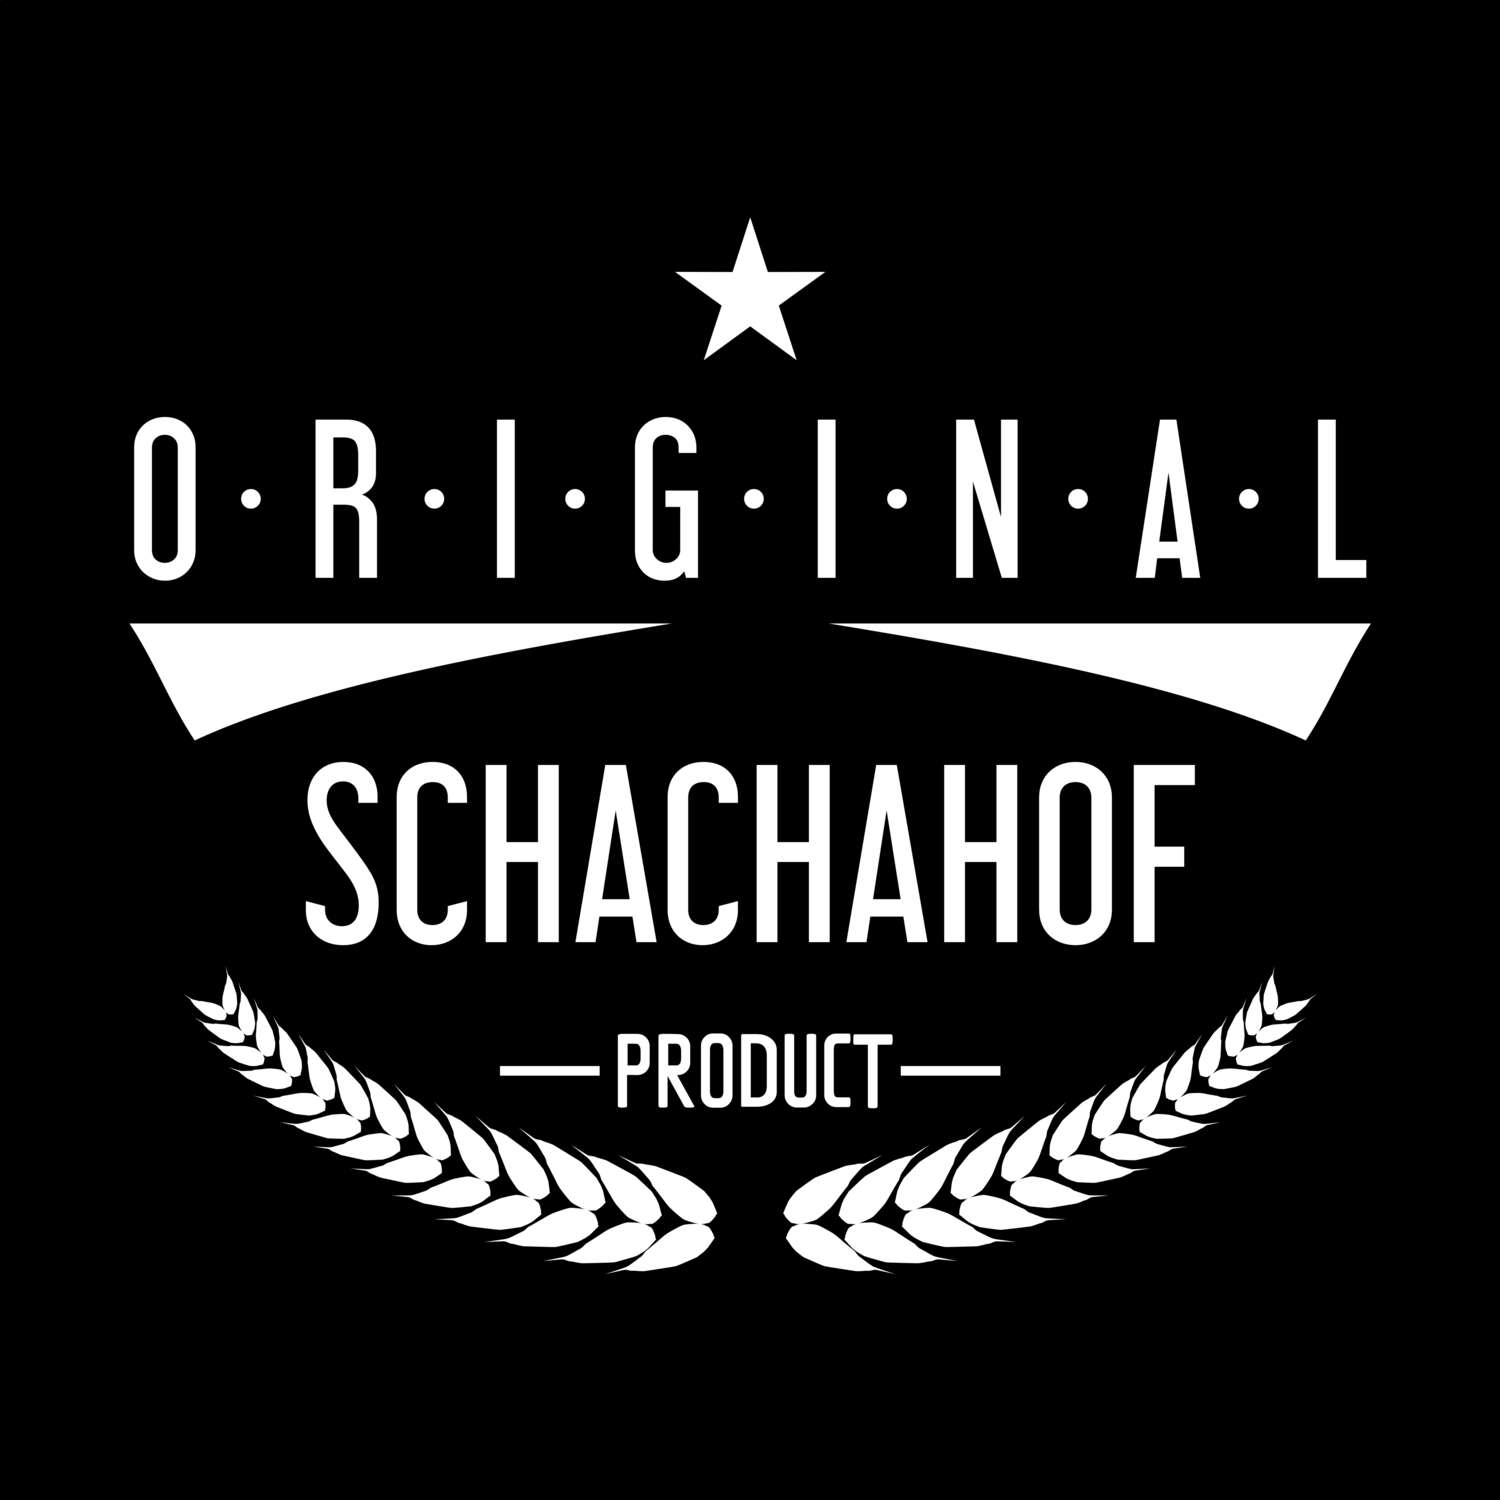 Schachahof T-Shirt »Original Product«